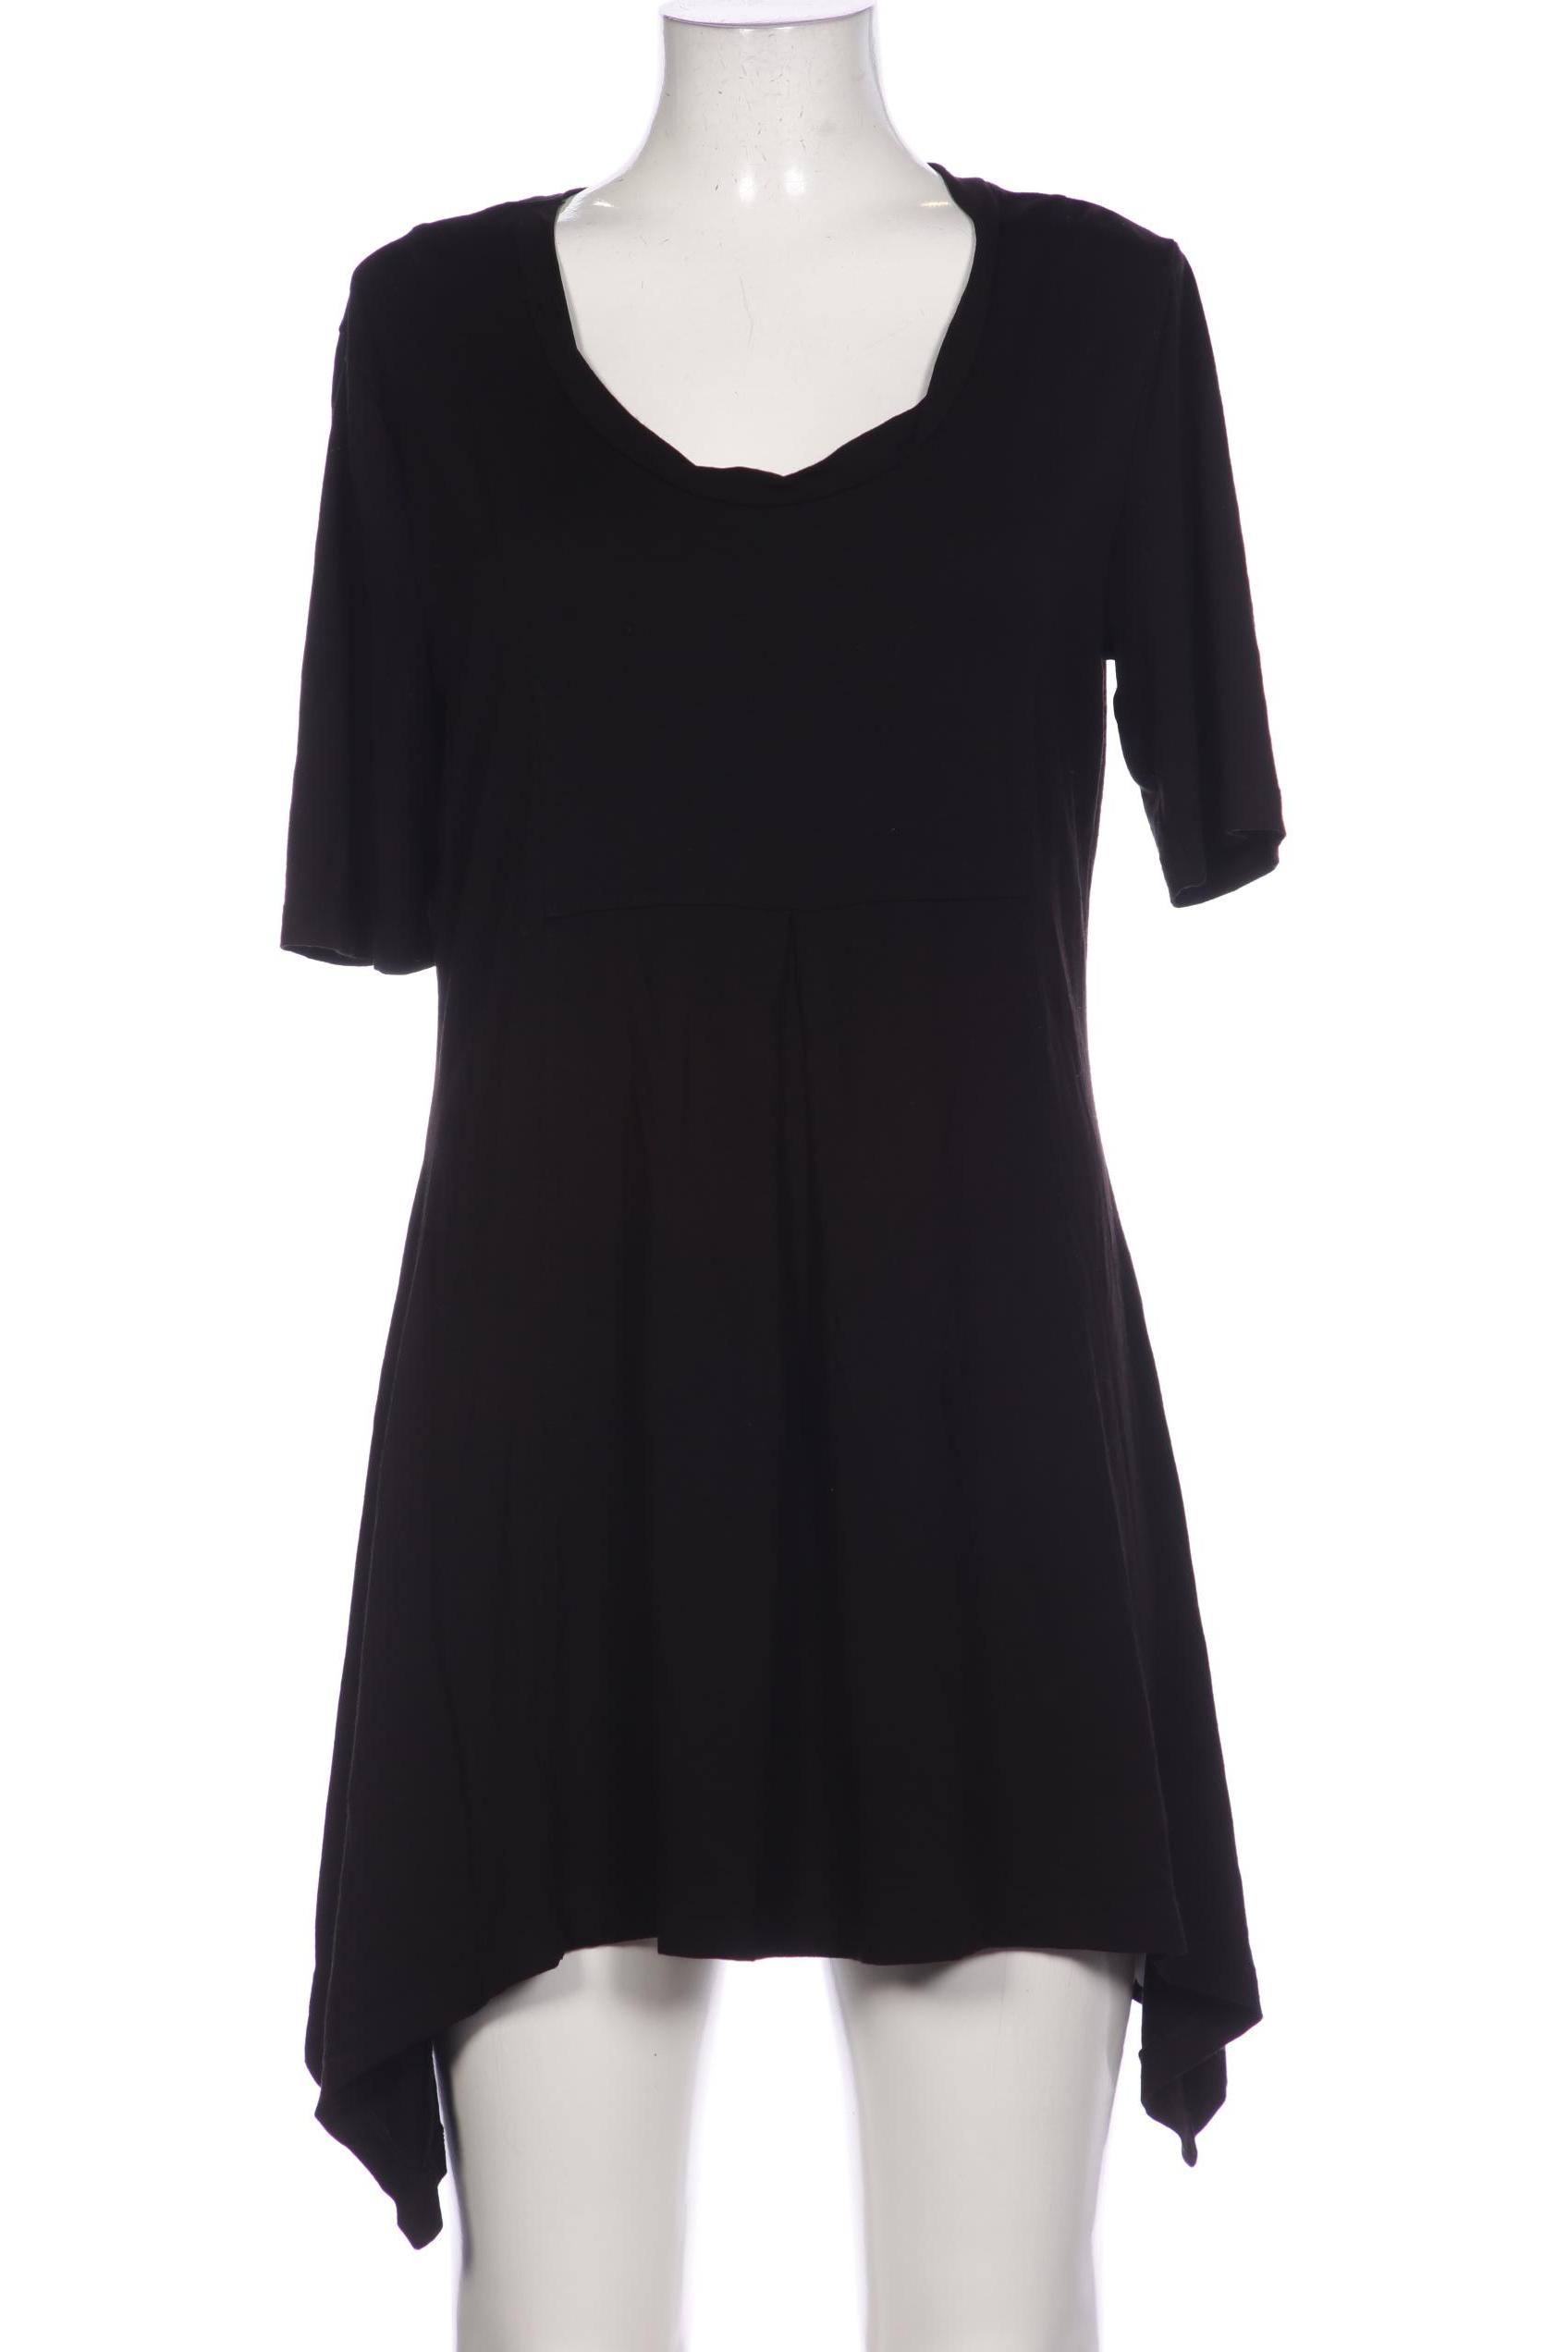 VIA Appia DUE Damen Kleid, schwarz, Gr. 42 von VIA APPIA DUE